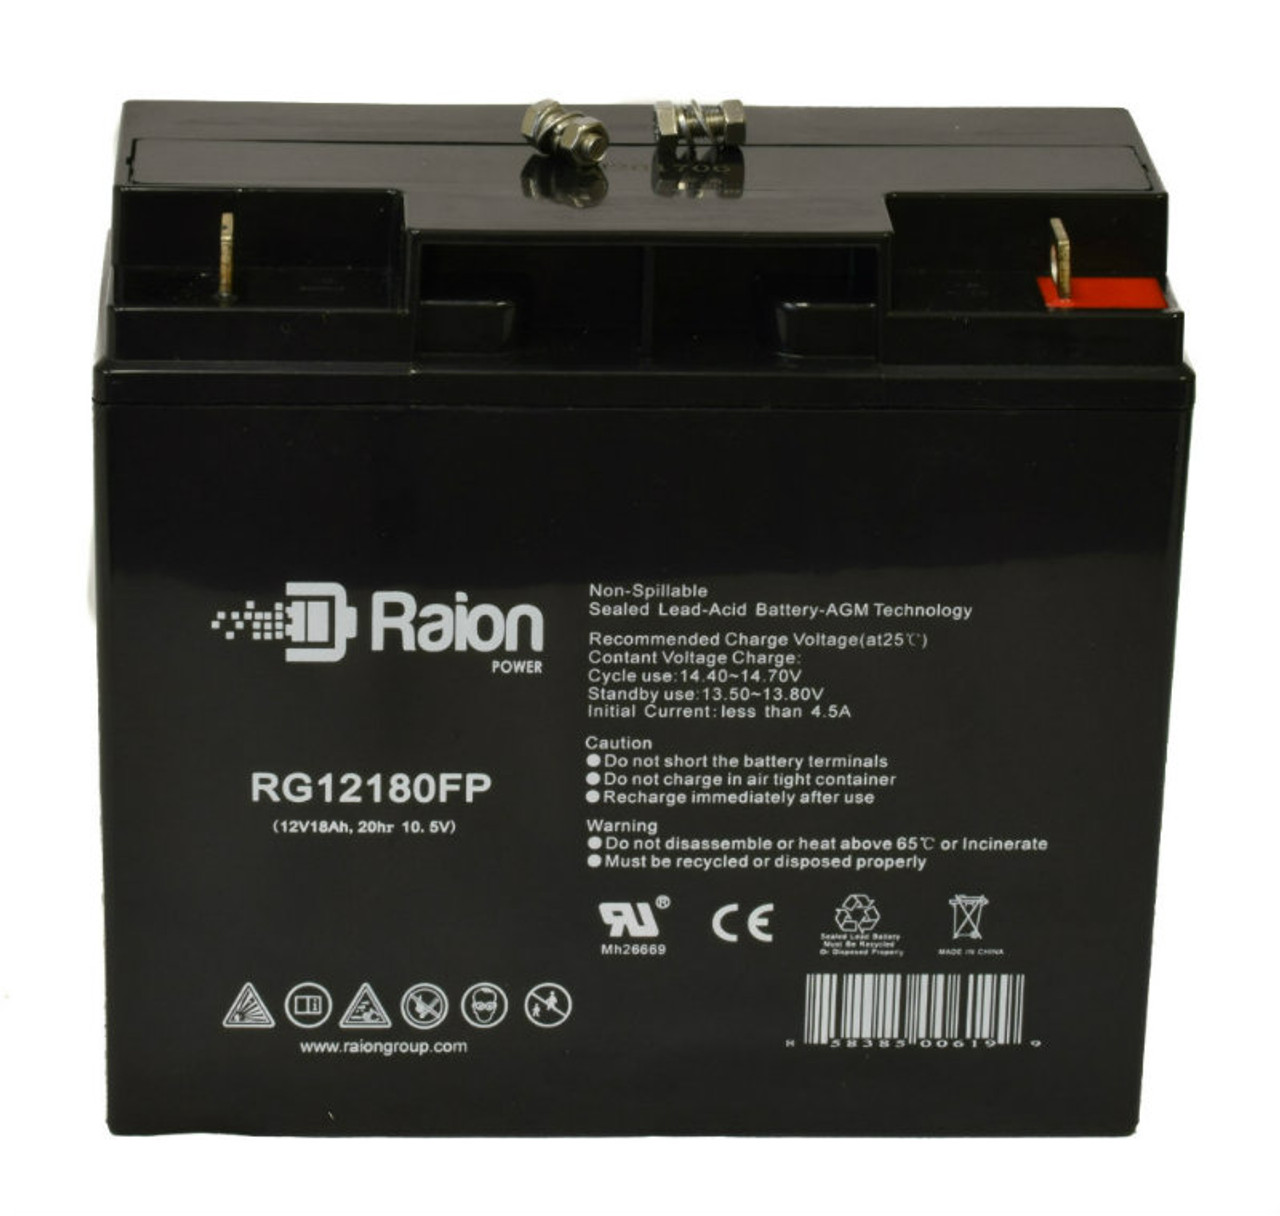 Raion Power RG12180FP 12V 18Ah Lead Acid Battery for Sure-Lites / Cooper Lighting SL-26-11